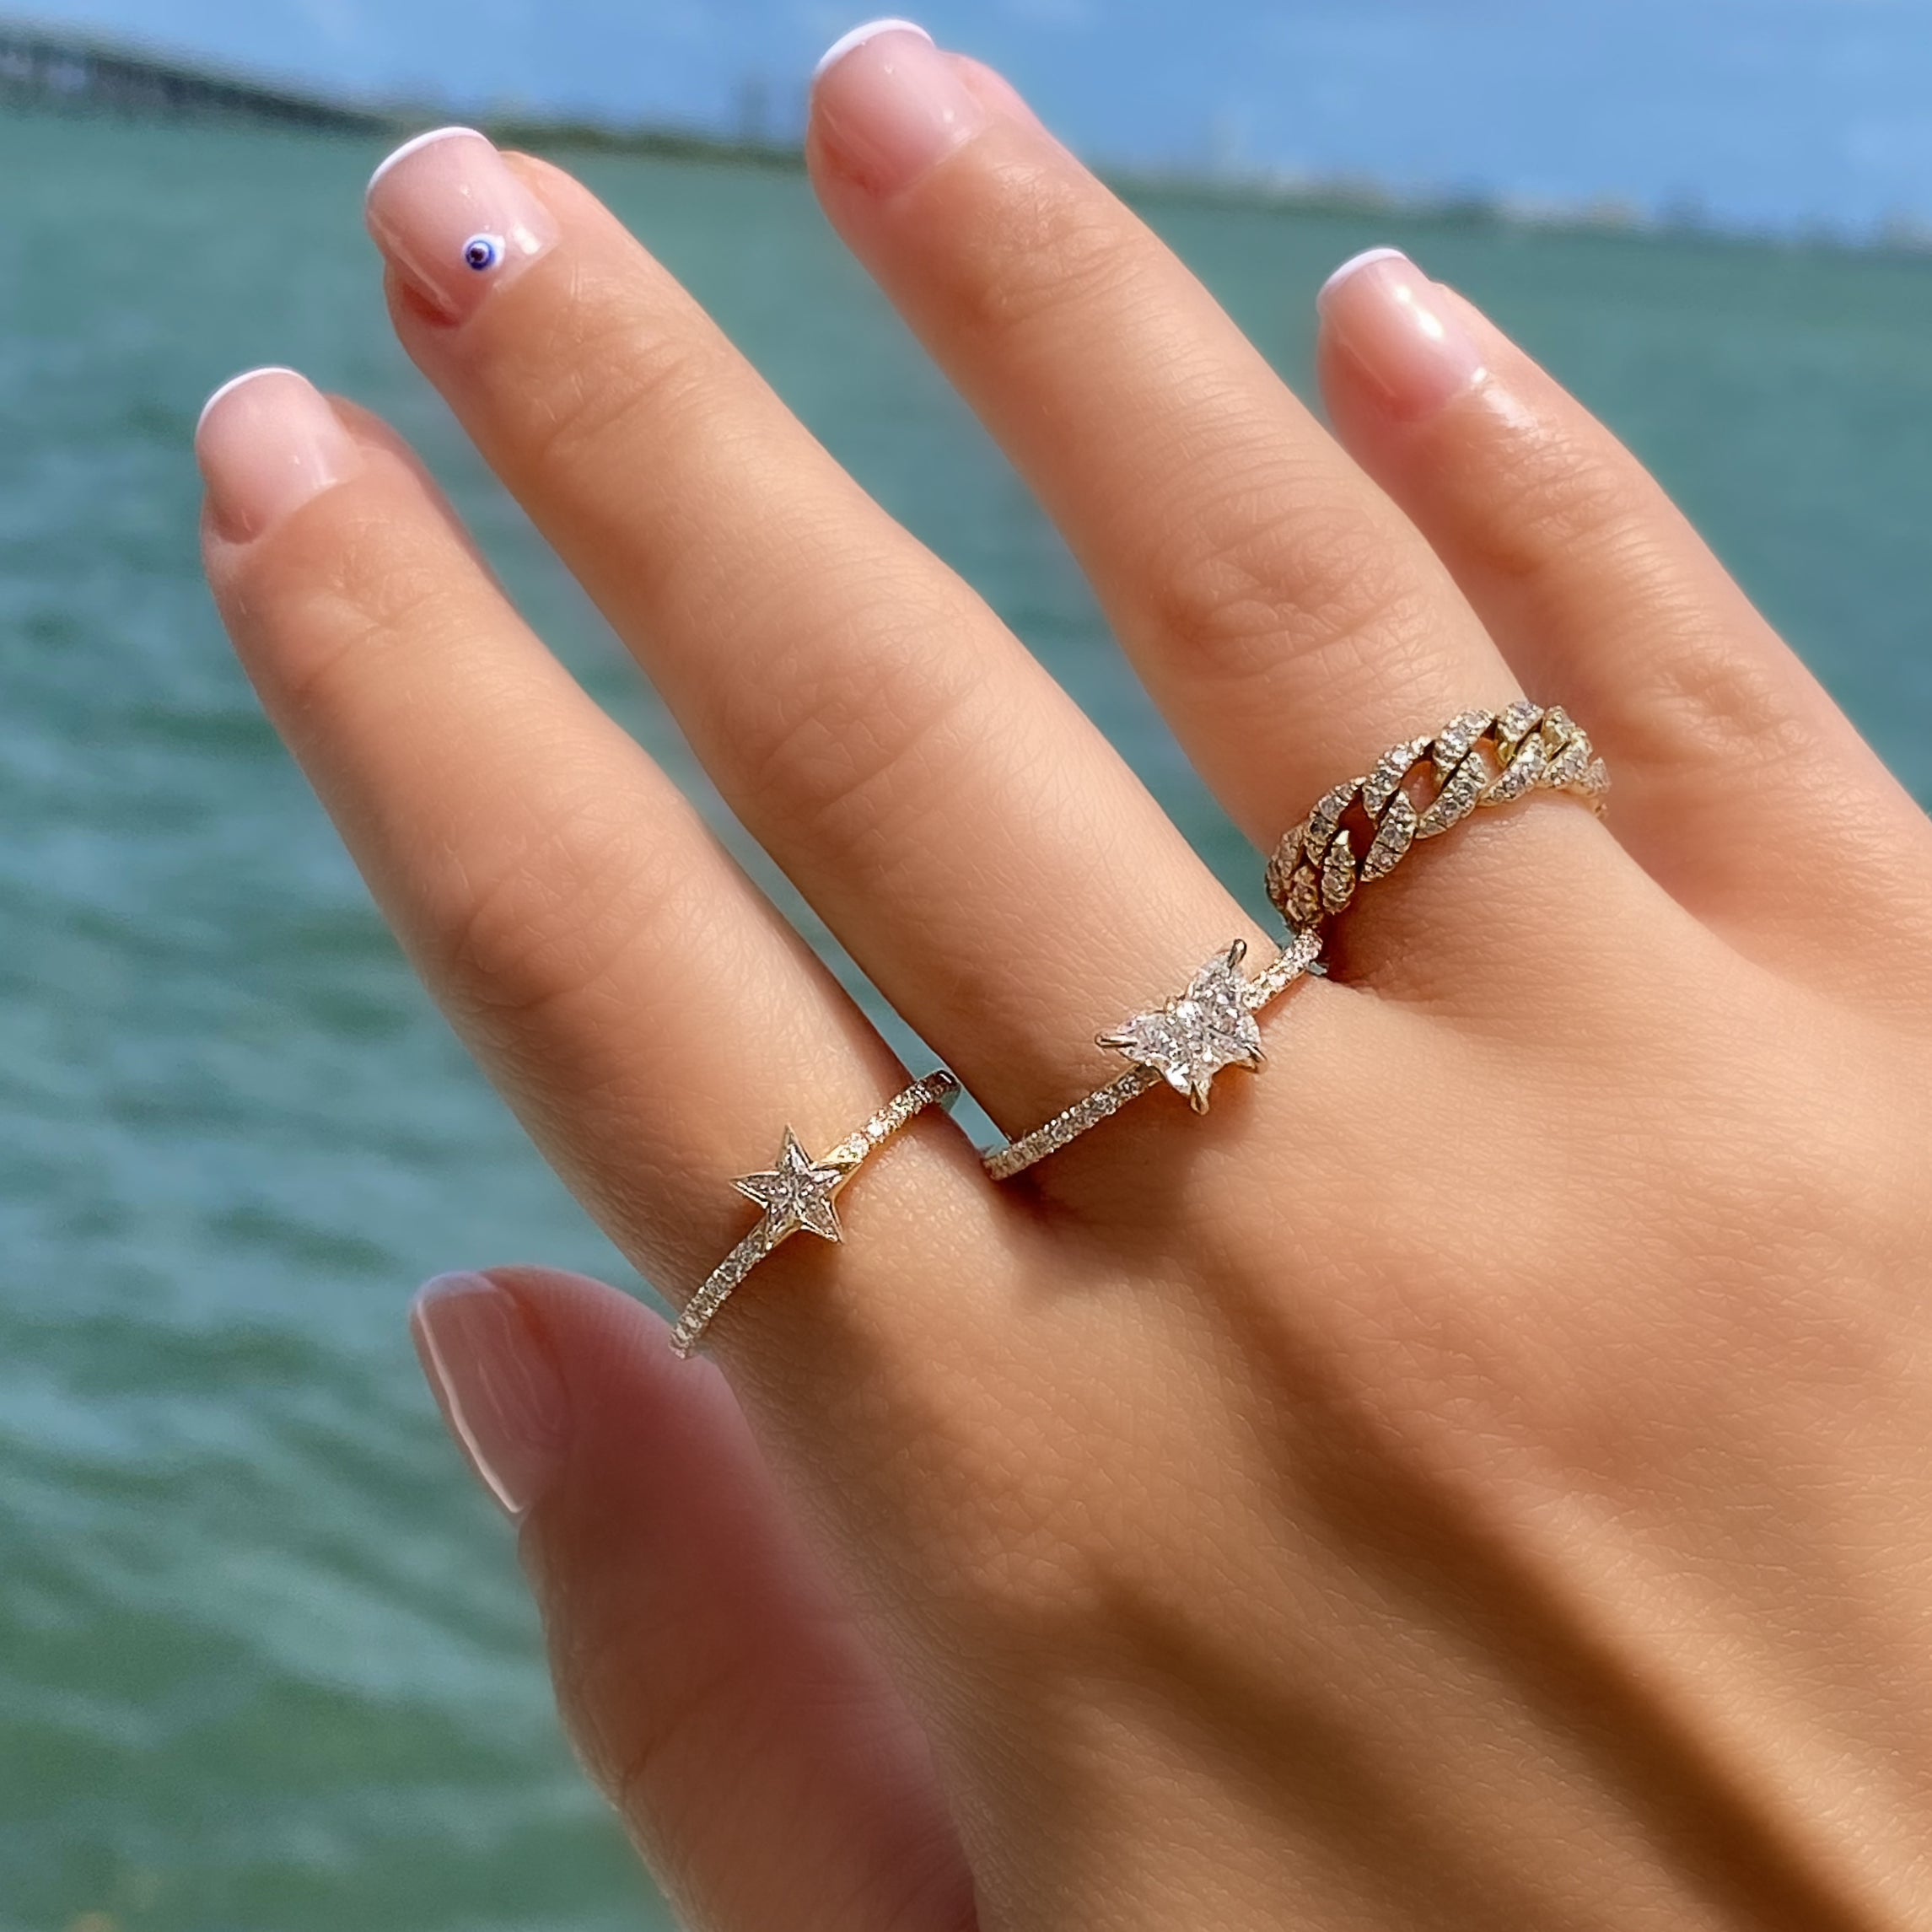 18K Gold Solid Star Shaped Diamond Pave Ring - Rings - Izakov Diamonds + Fine Jewelry